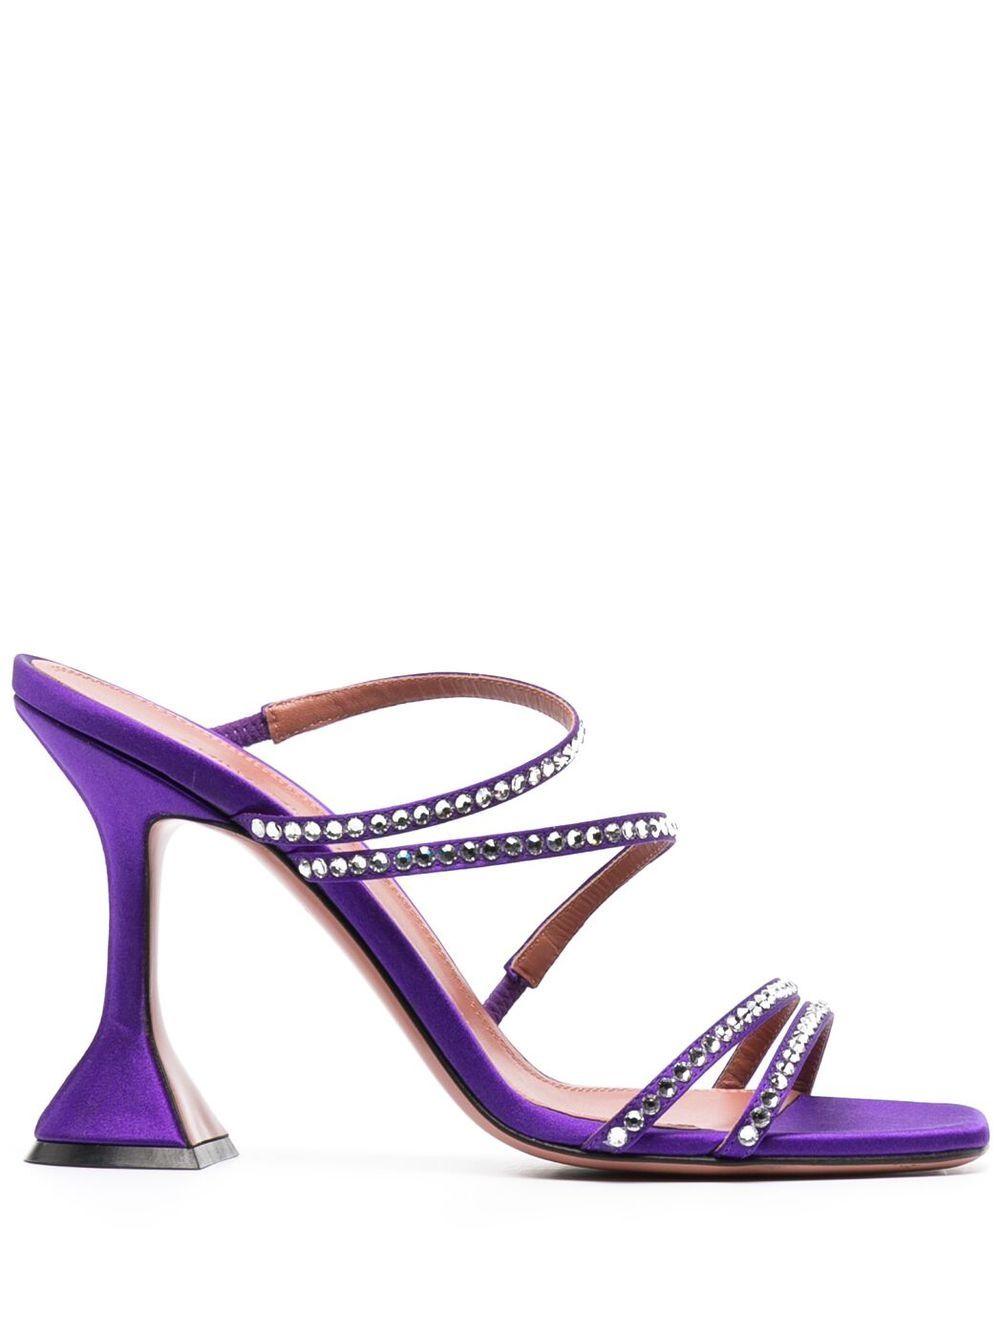 AMINA MUADDI Naima 95mm Crystal-embellished Sandals in Purple | Lyst